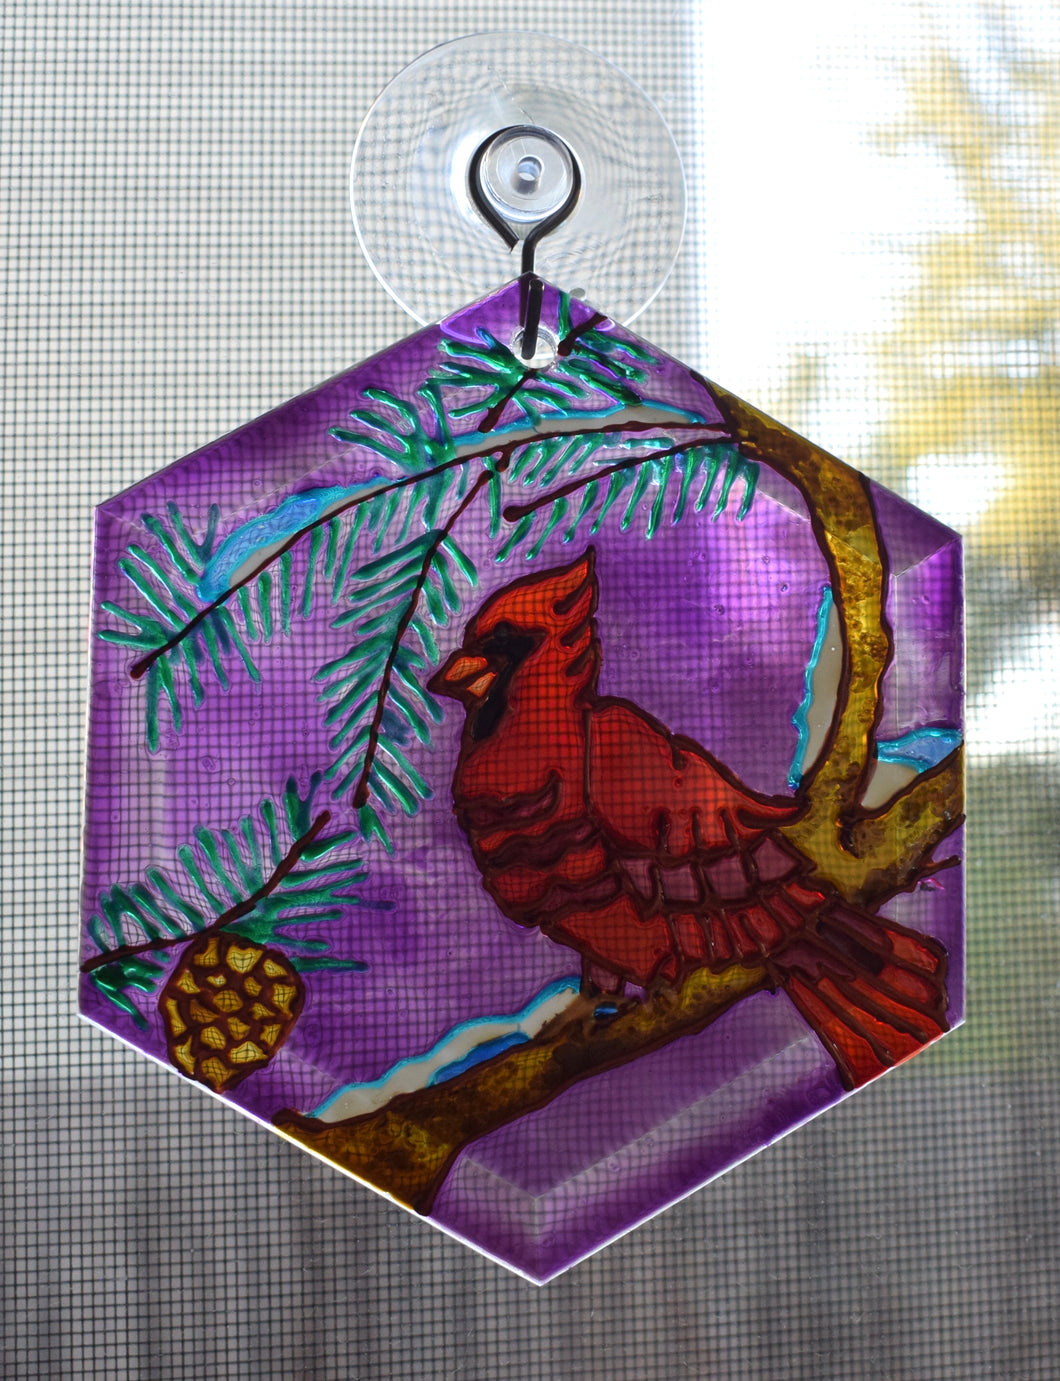 Small Painted Glass Suncatcher - Winter Cardinal